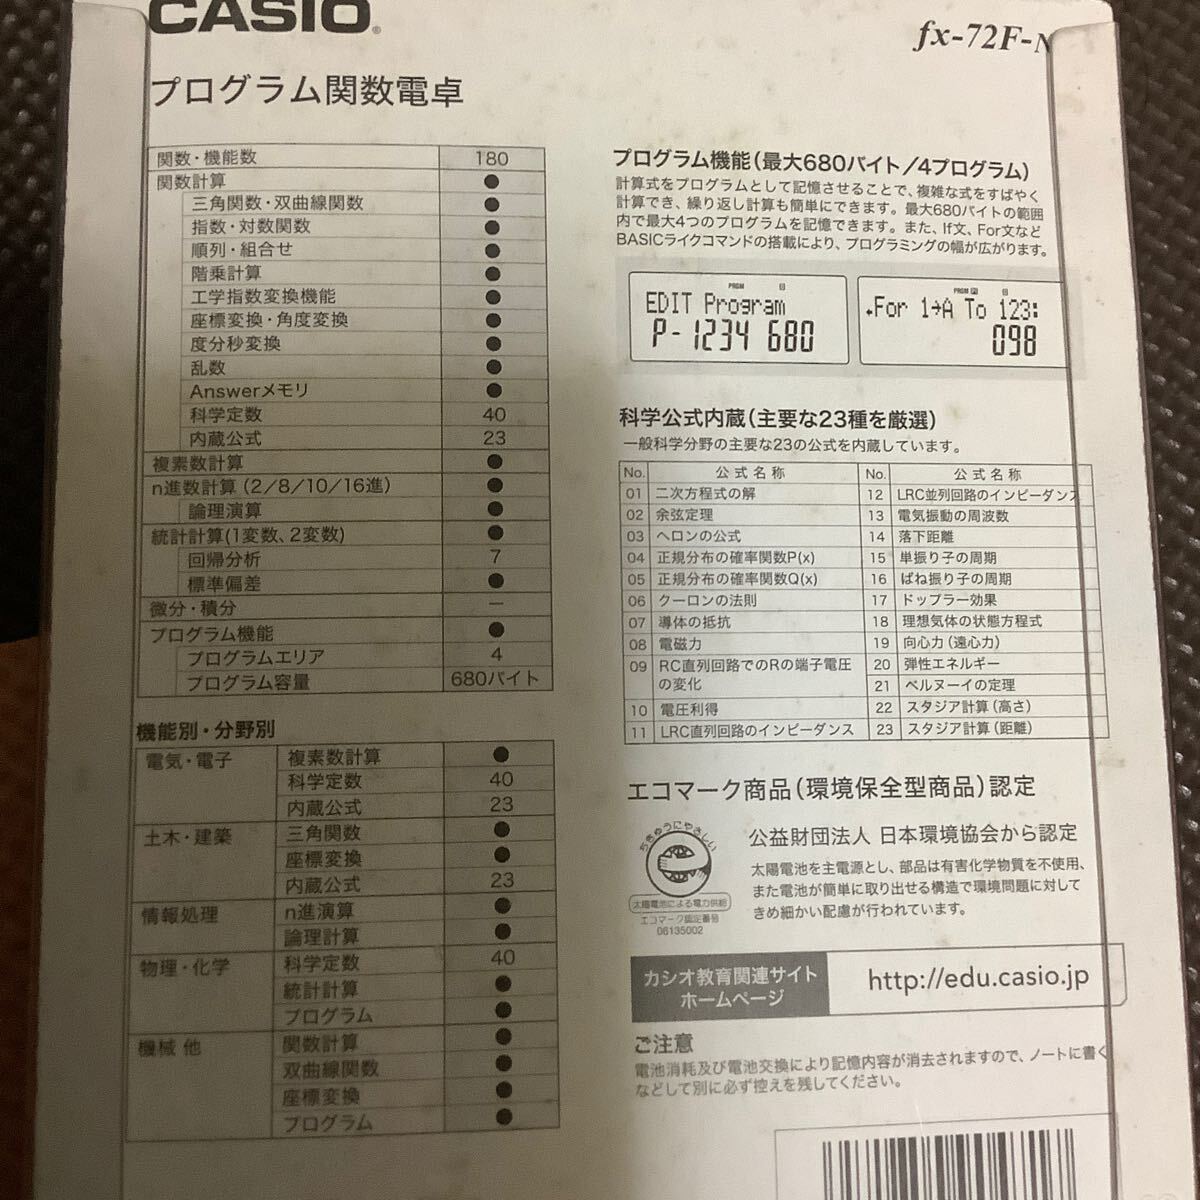 CASIO( Casio )| program scientific calculator [fx-72F-N]| tube TLY